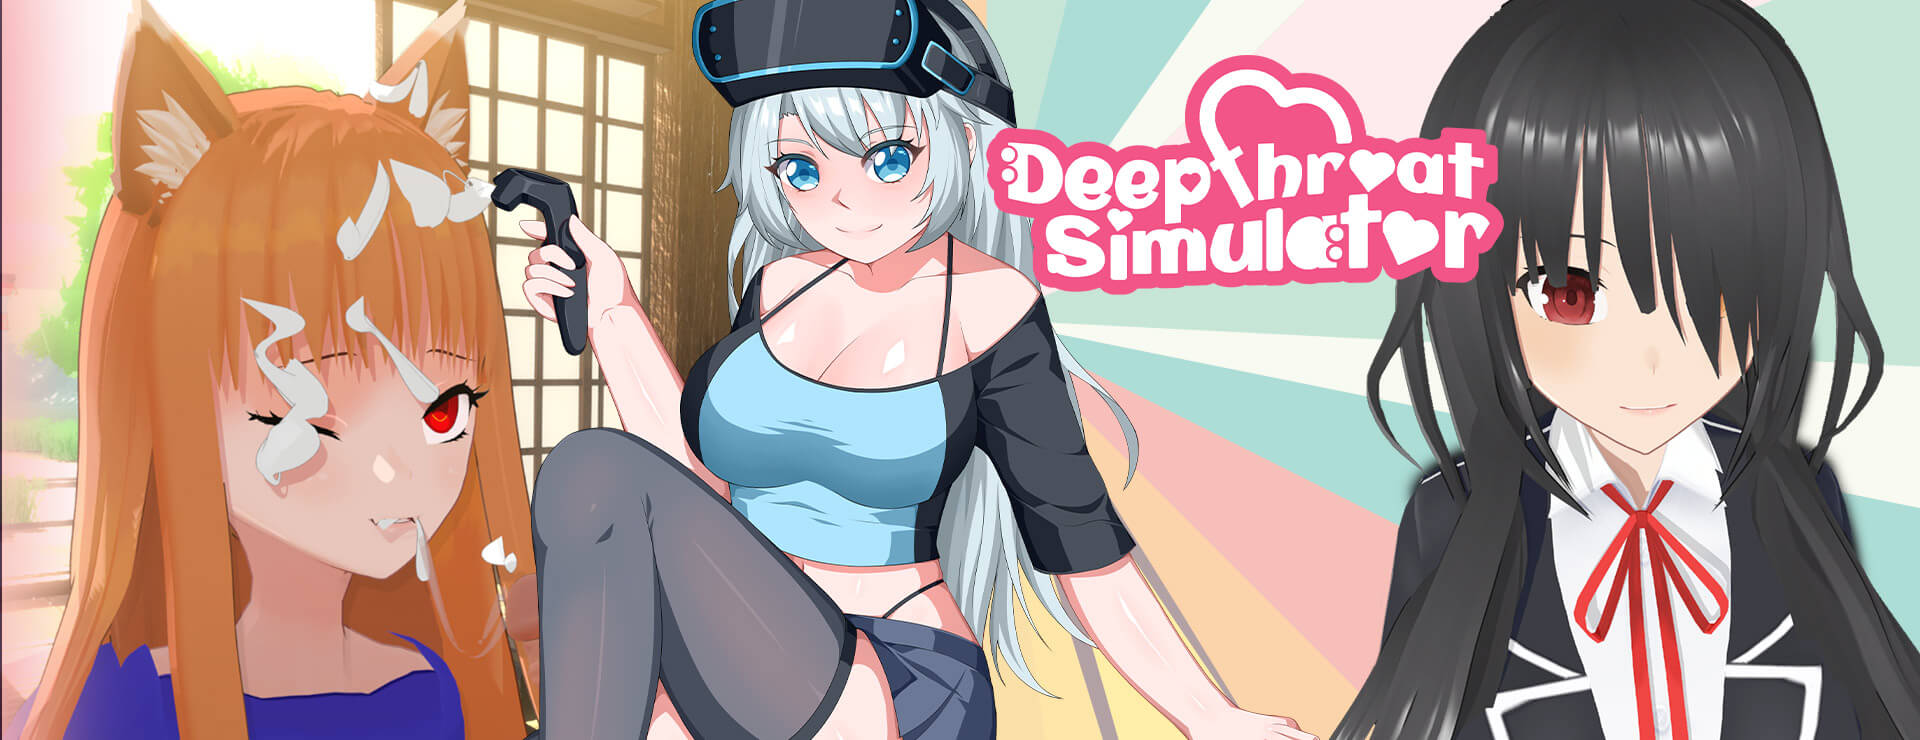 Deepthroat Simulator - シミュレーション ゲーム